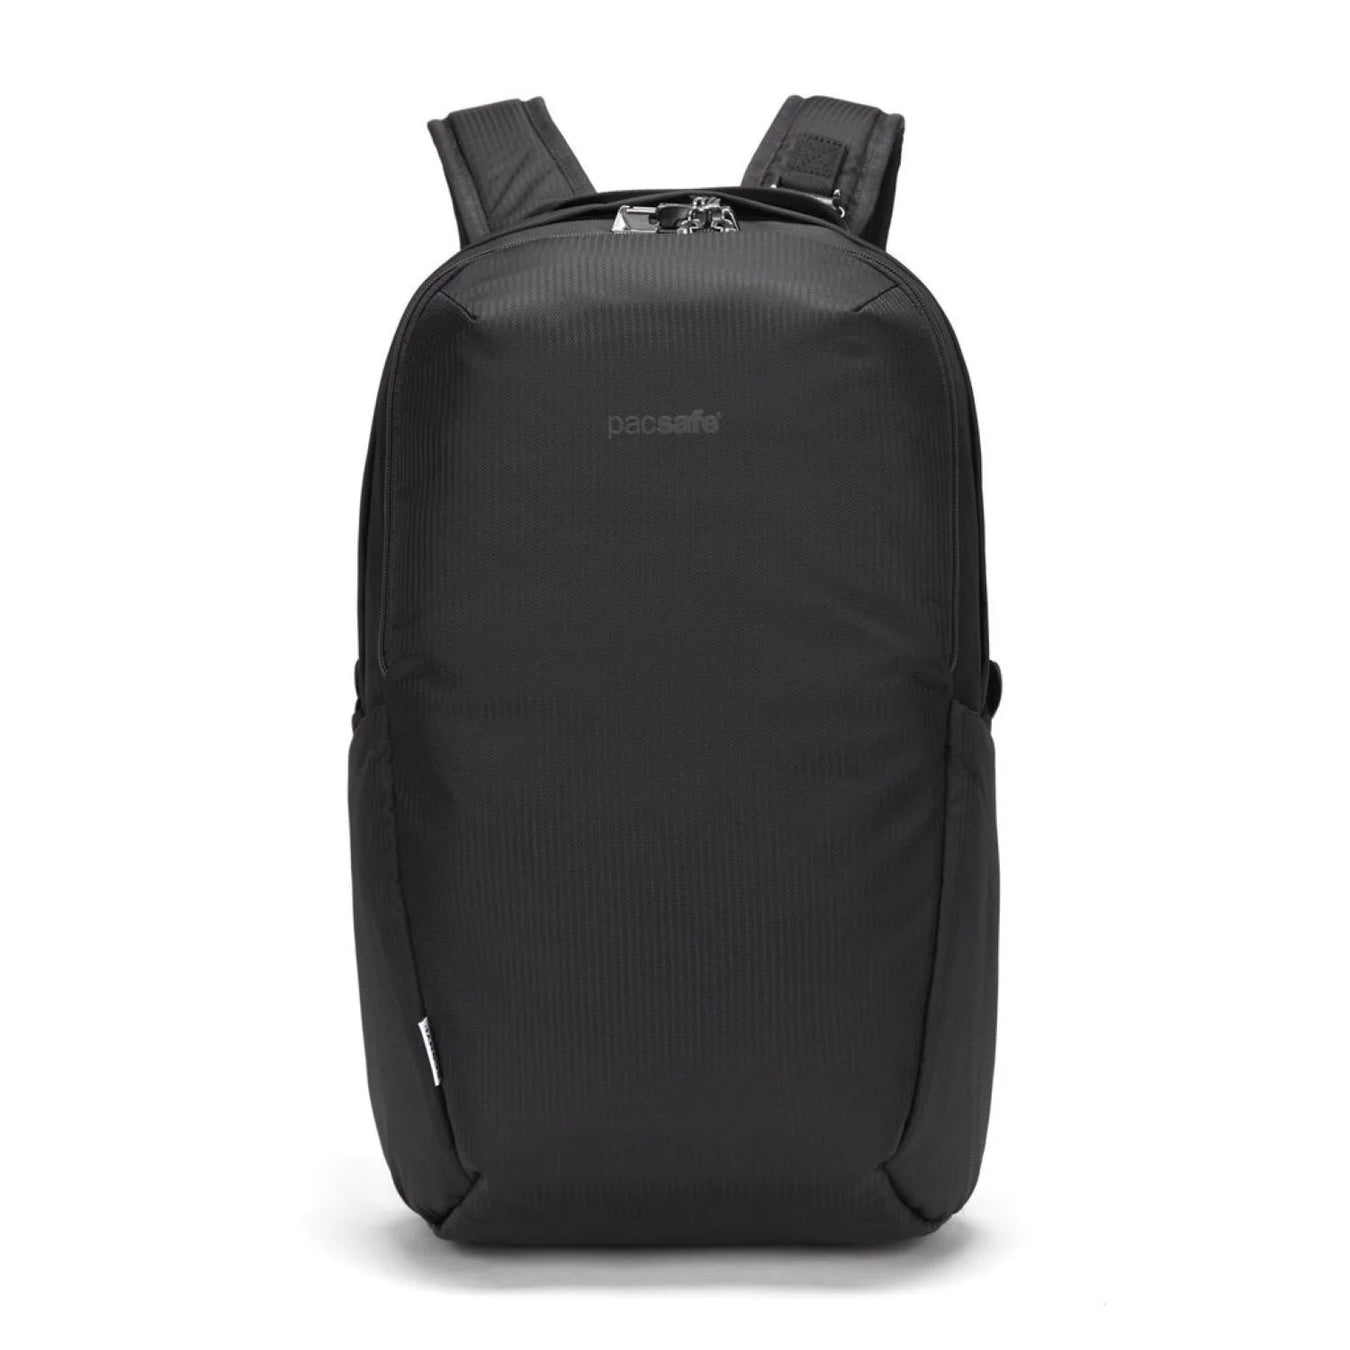 Pacsafe's Laptop Backpacks